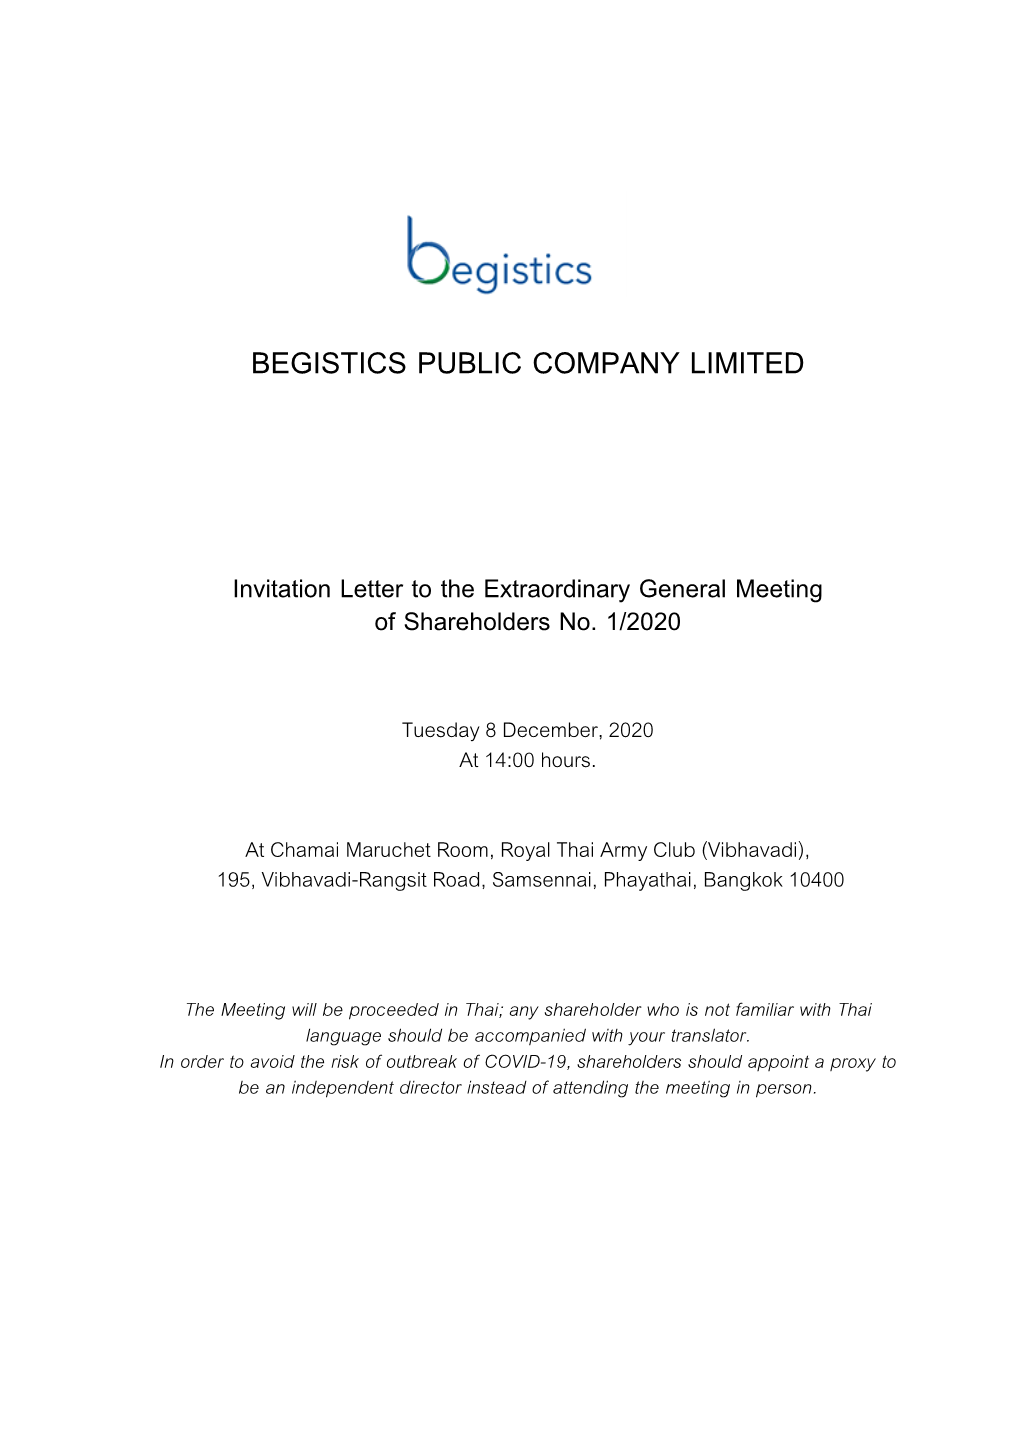 Begistics Public Company Limited